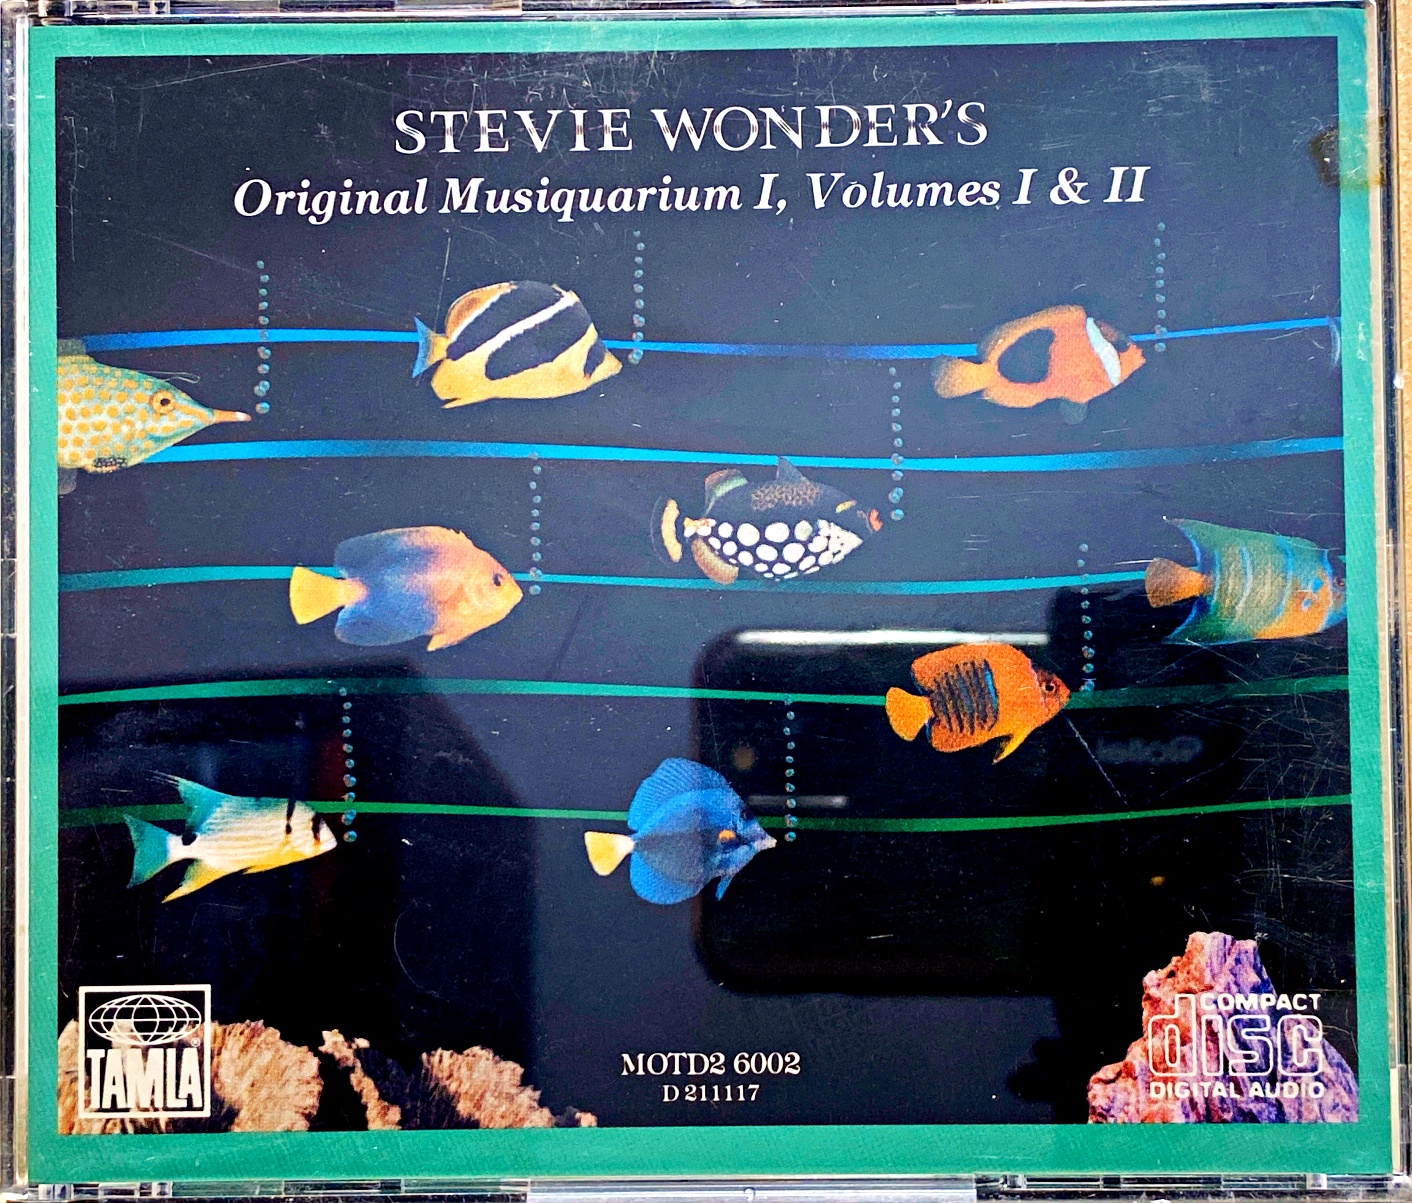 2xCD Stevie Wonder – Stevie Wonder's Original Musiquarium 1, Volumes I & II